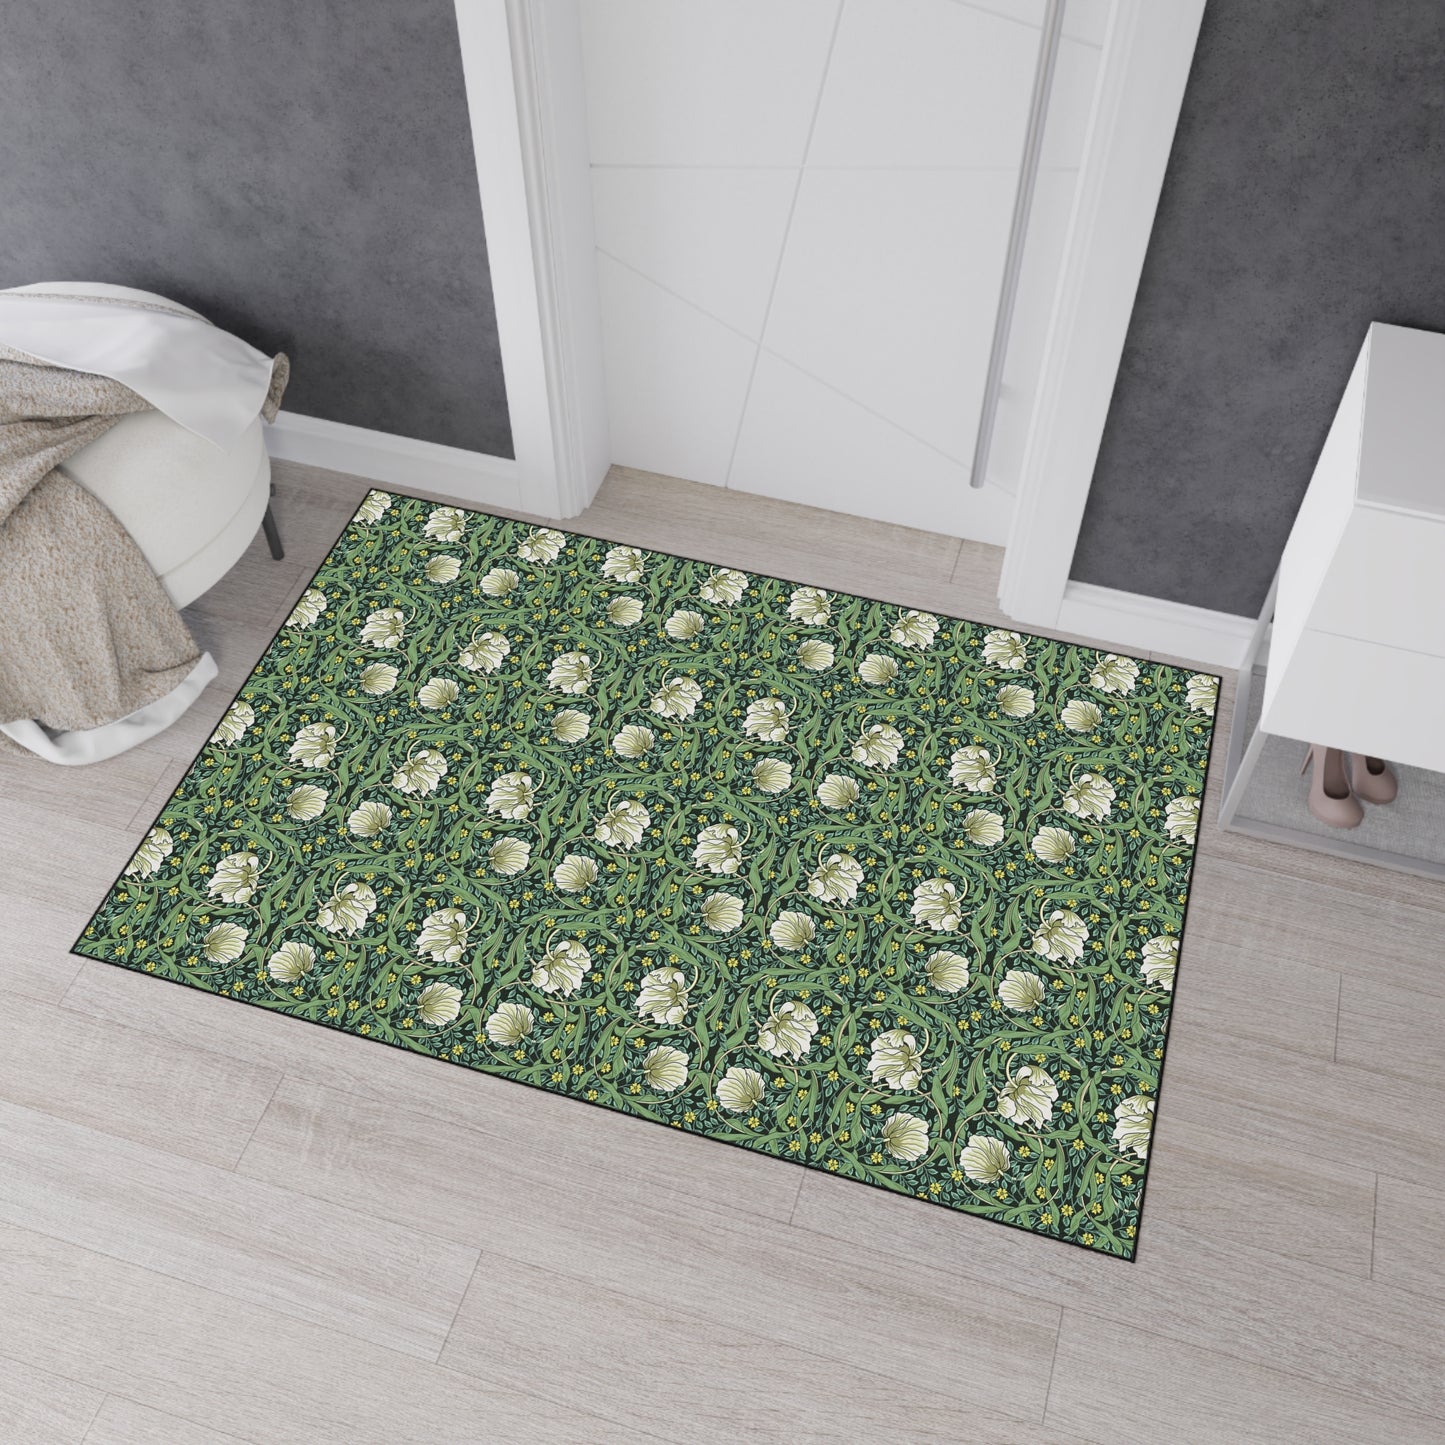 william-morris-co-heavy-duty-floor-mat-floor-mat-pimpernel-collection-green-9